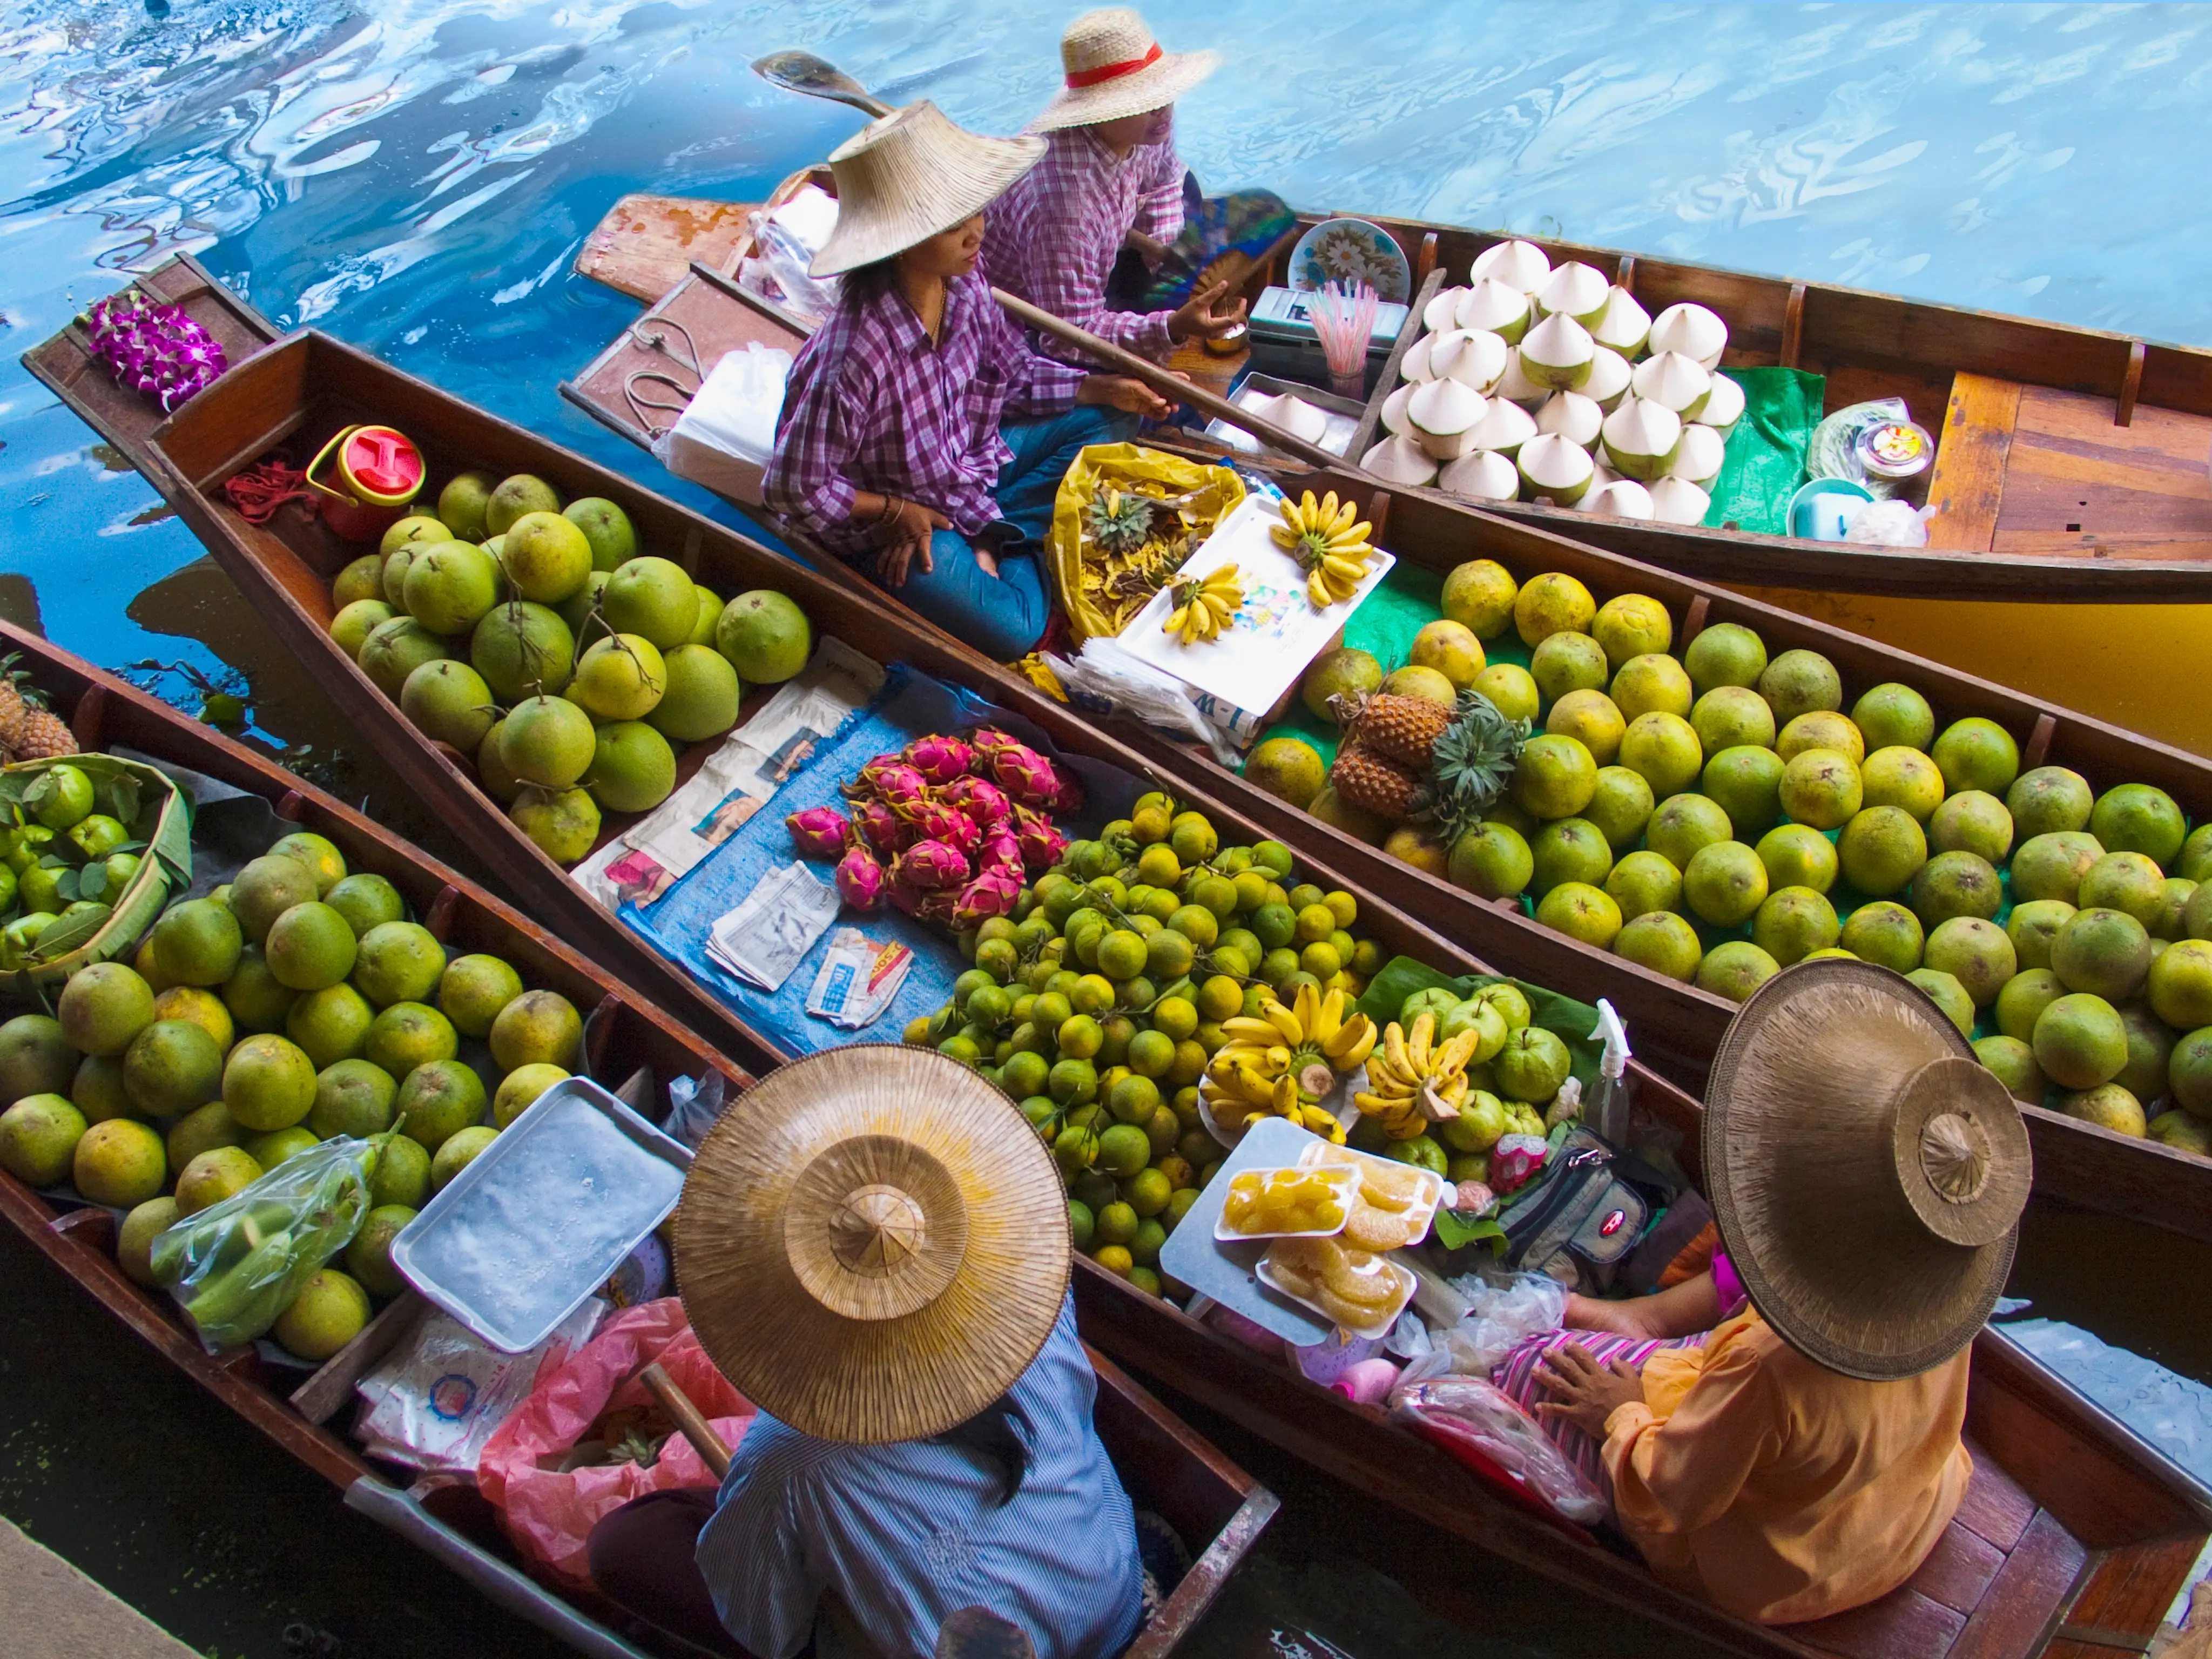 Fruit seller in the floating market, Thailand